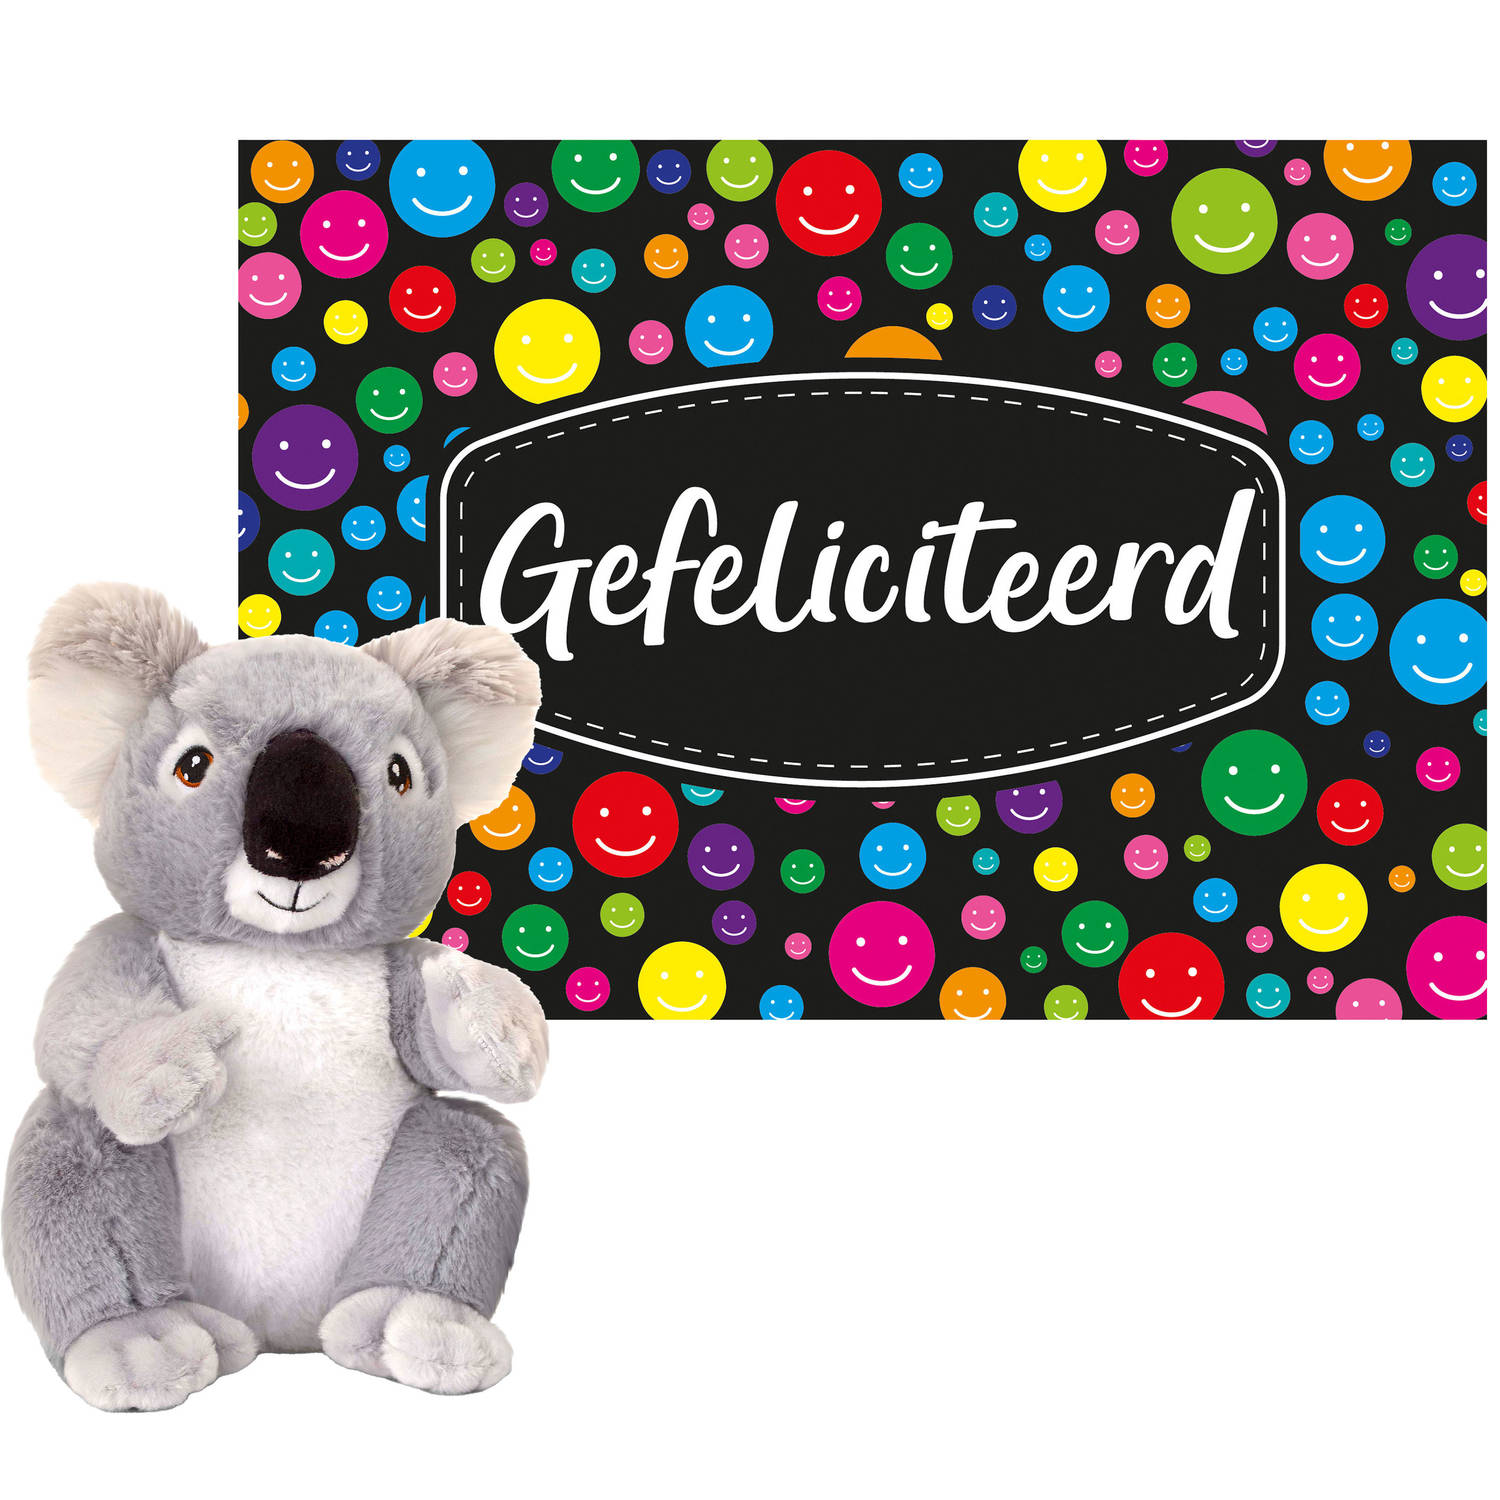 Keel Toys Cadeaukaart Gefeliciteerd Met Knuffeldier Koala 26 Cm Knuffeldier